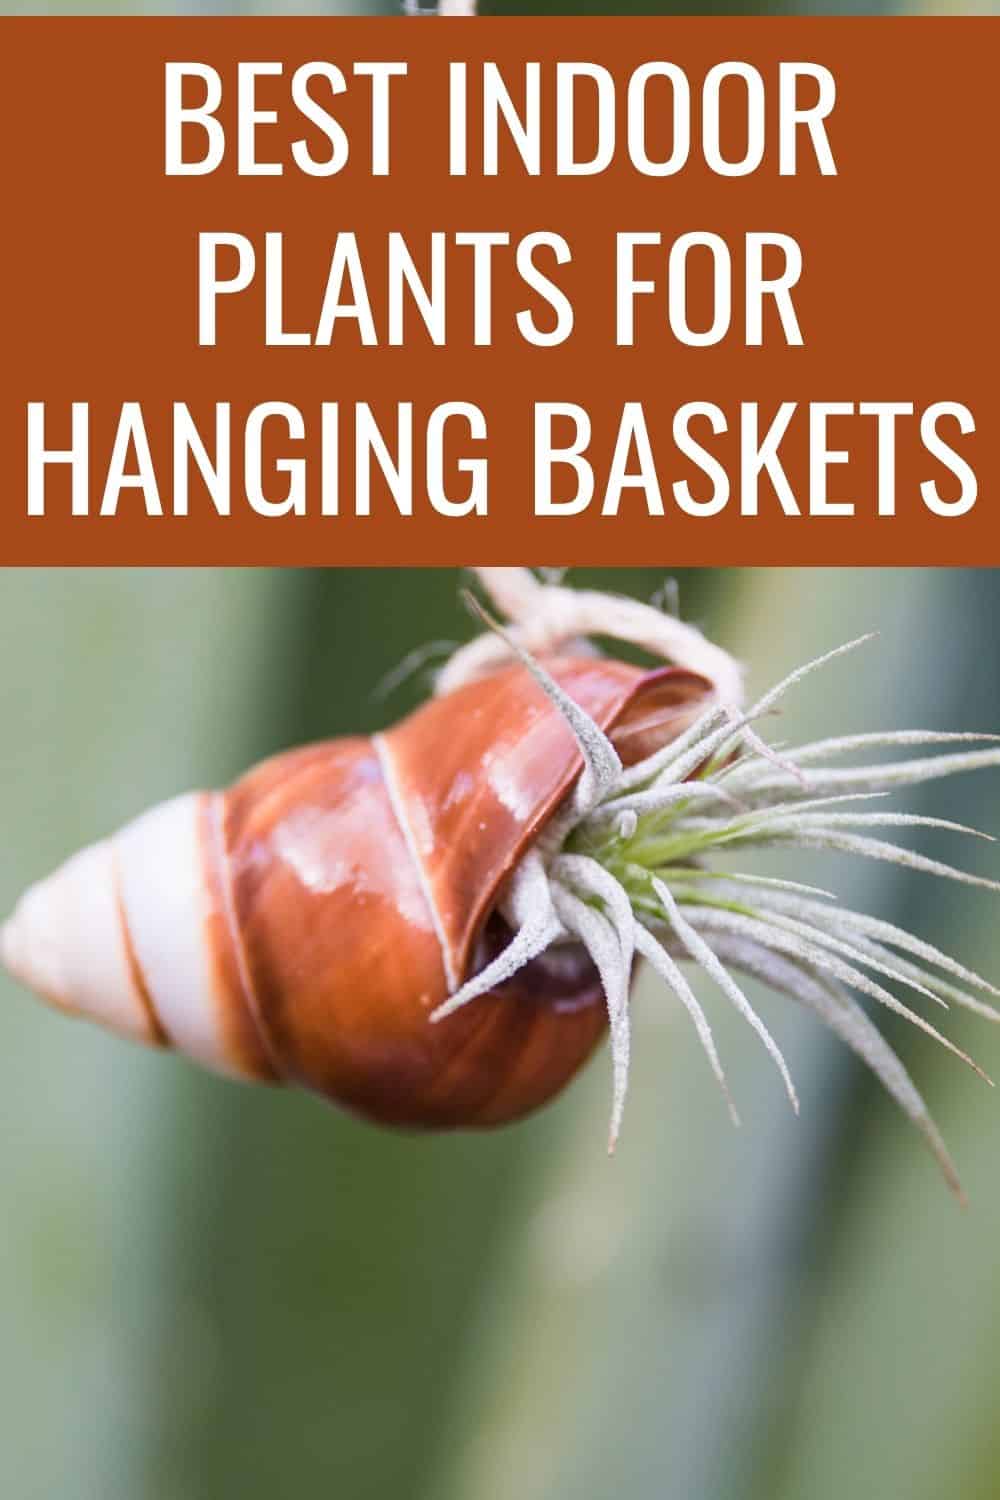 Best indoor plants for hanging baskets